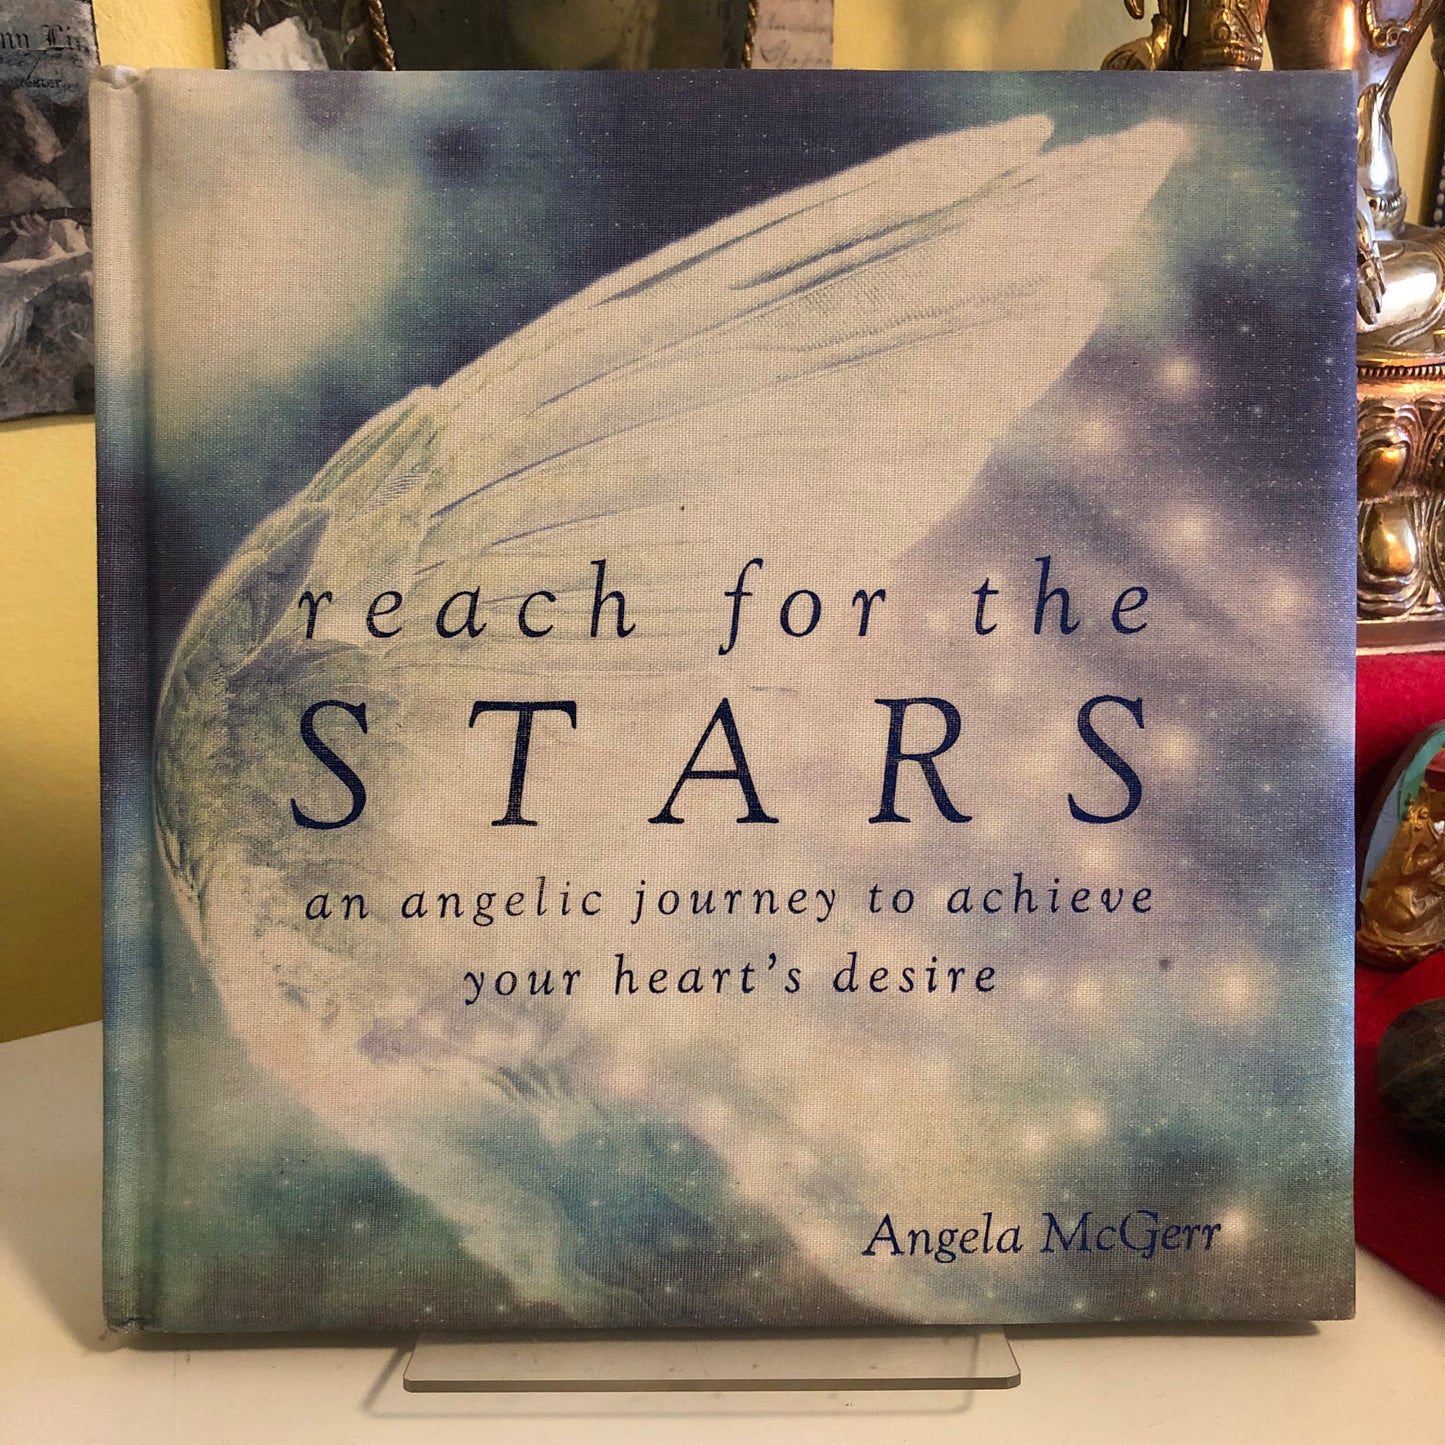 Reach for the stars - Angela McGerr